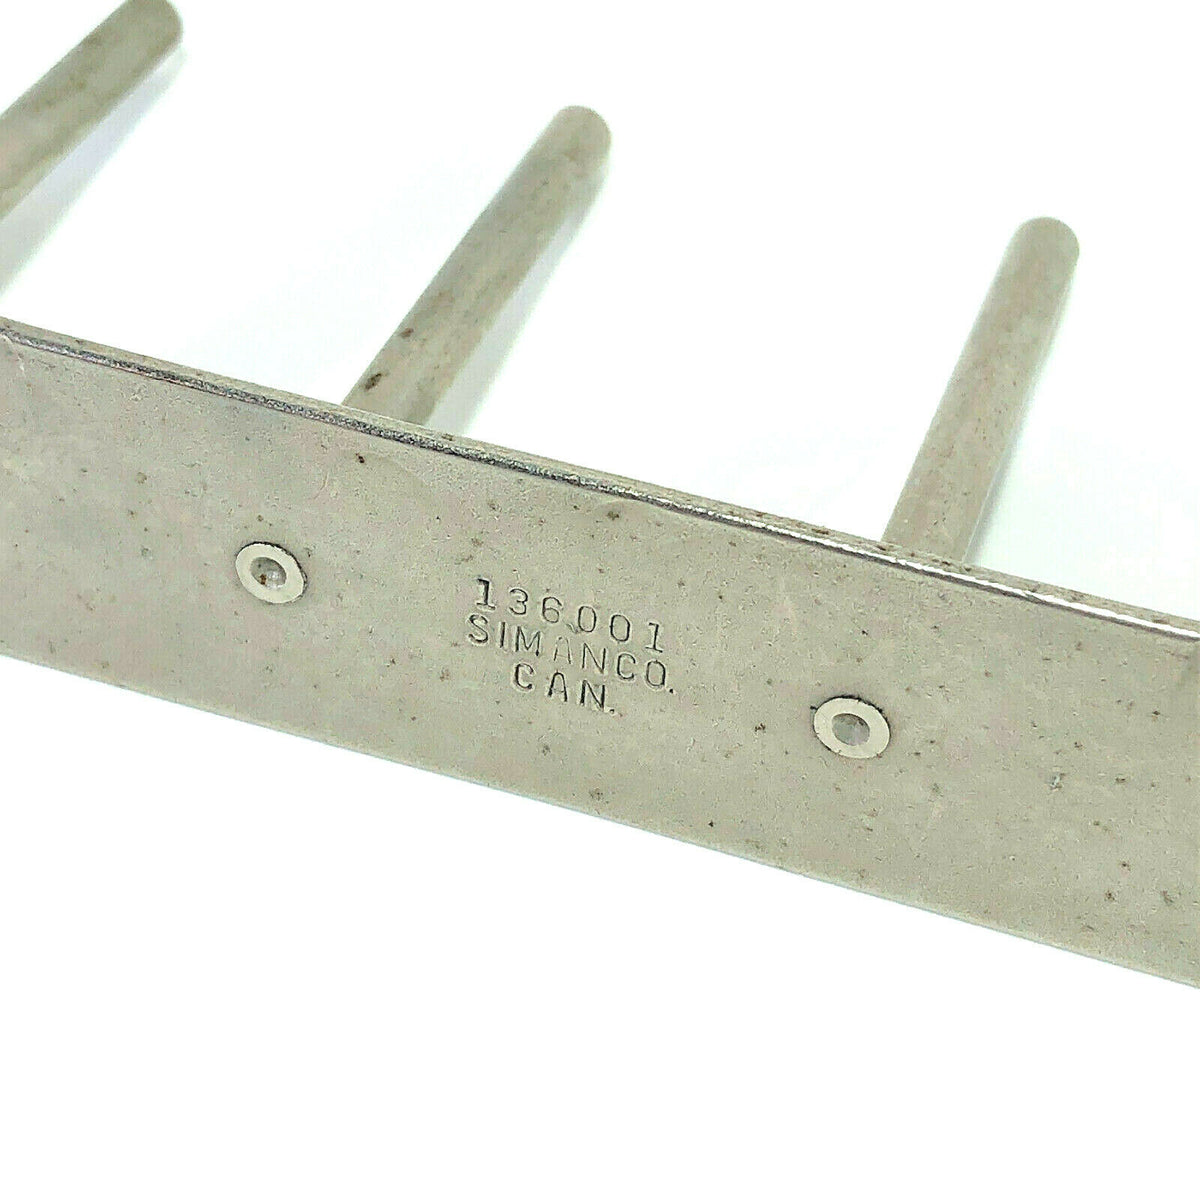 Singer Sewing Machine No 49 Cabinet Mounted Spool Thread Holder Rack  Simanco 136001